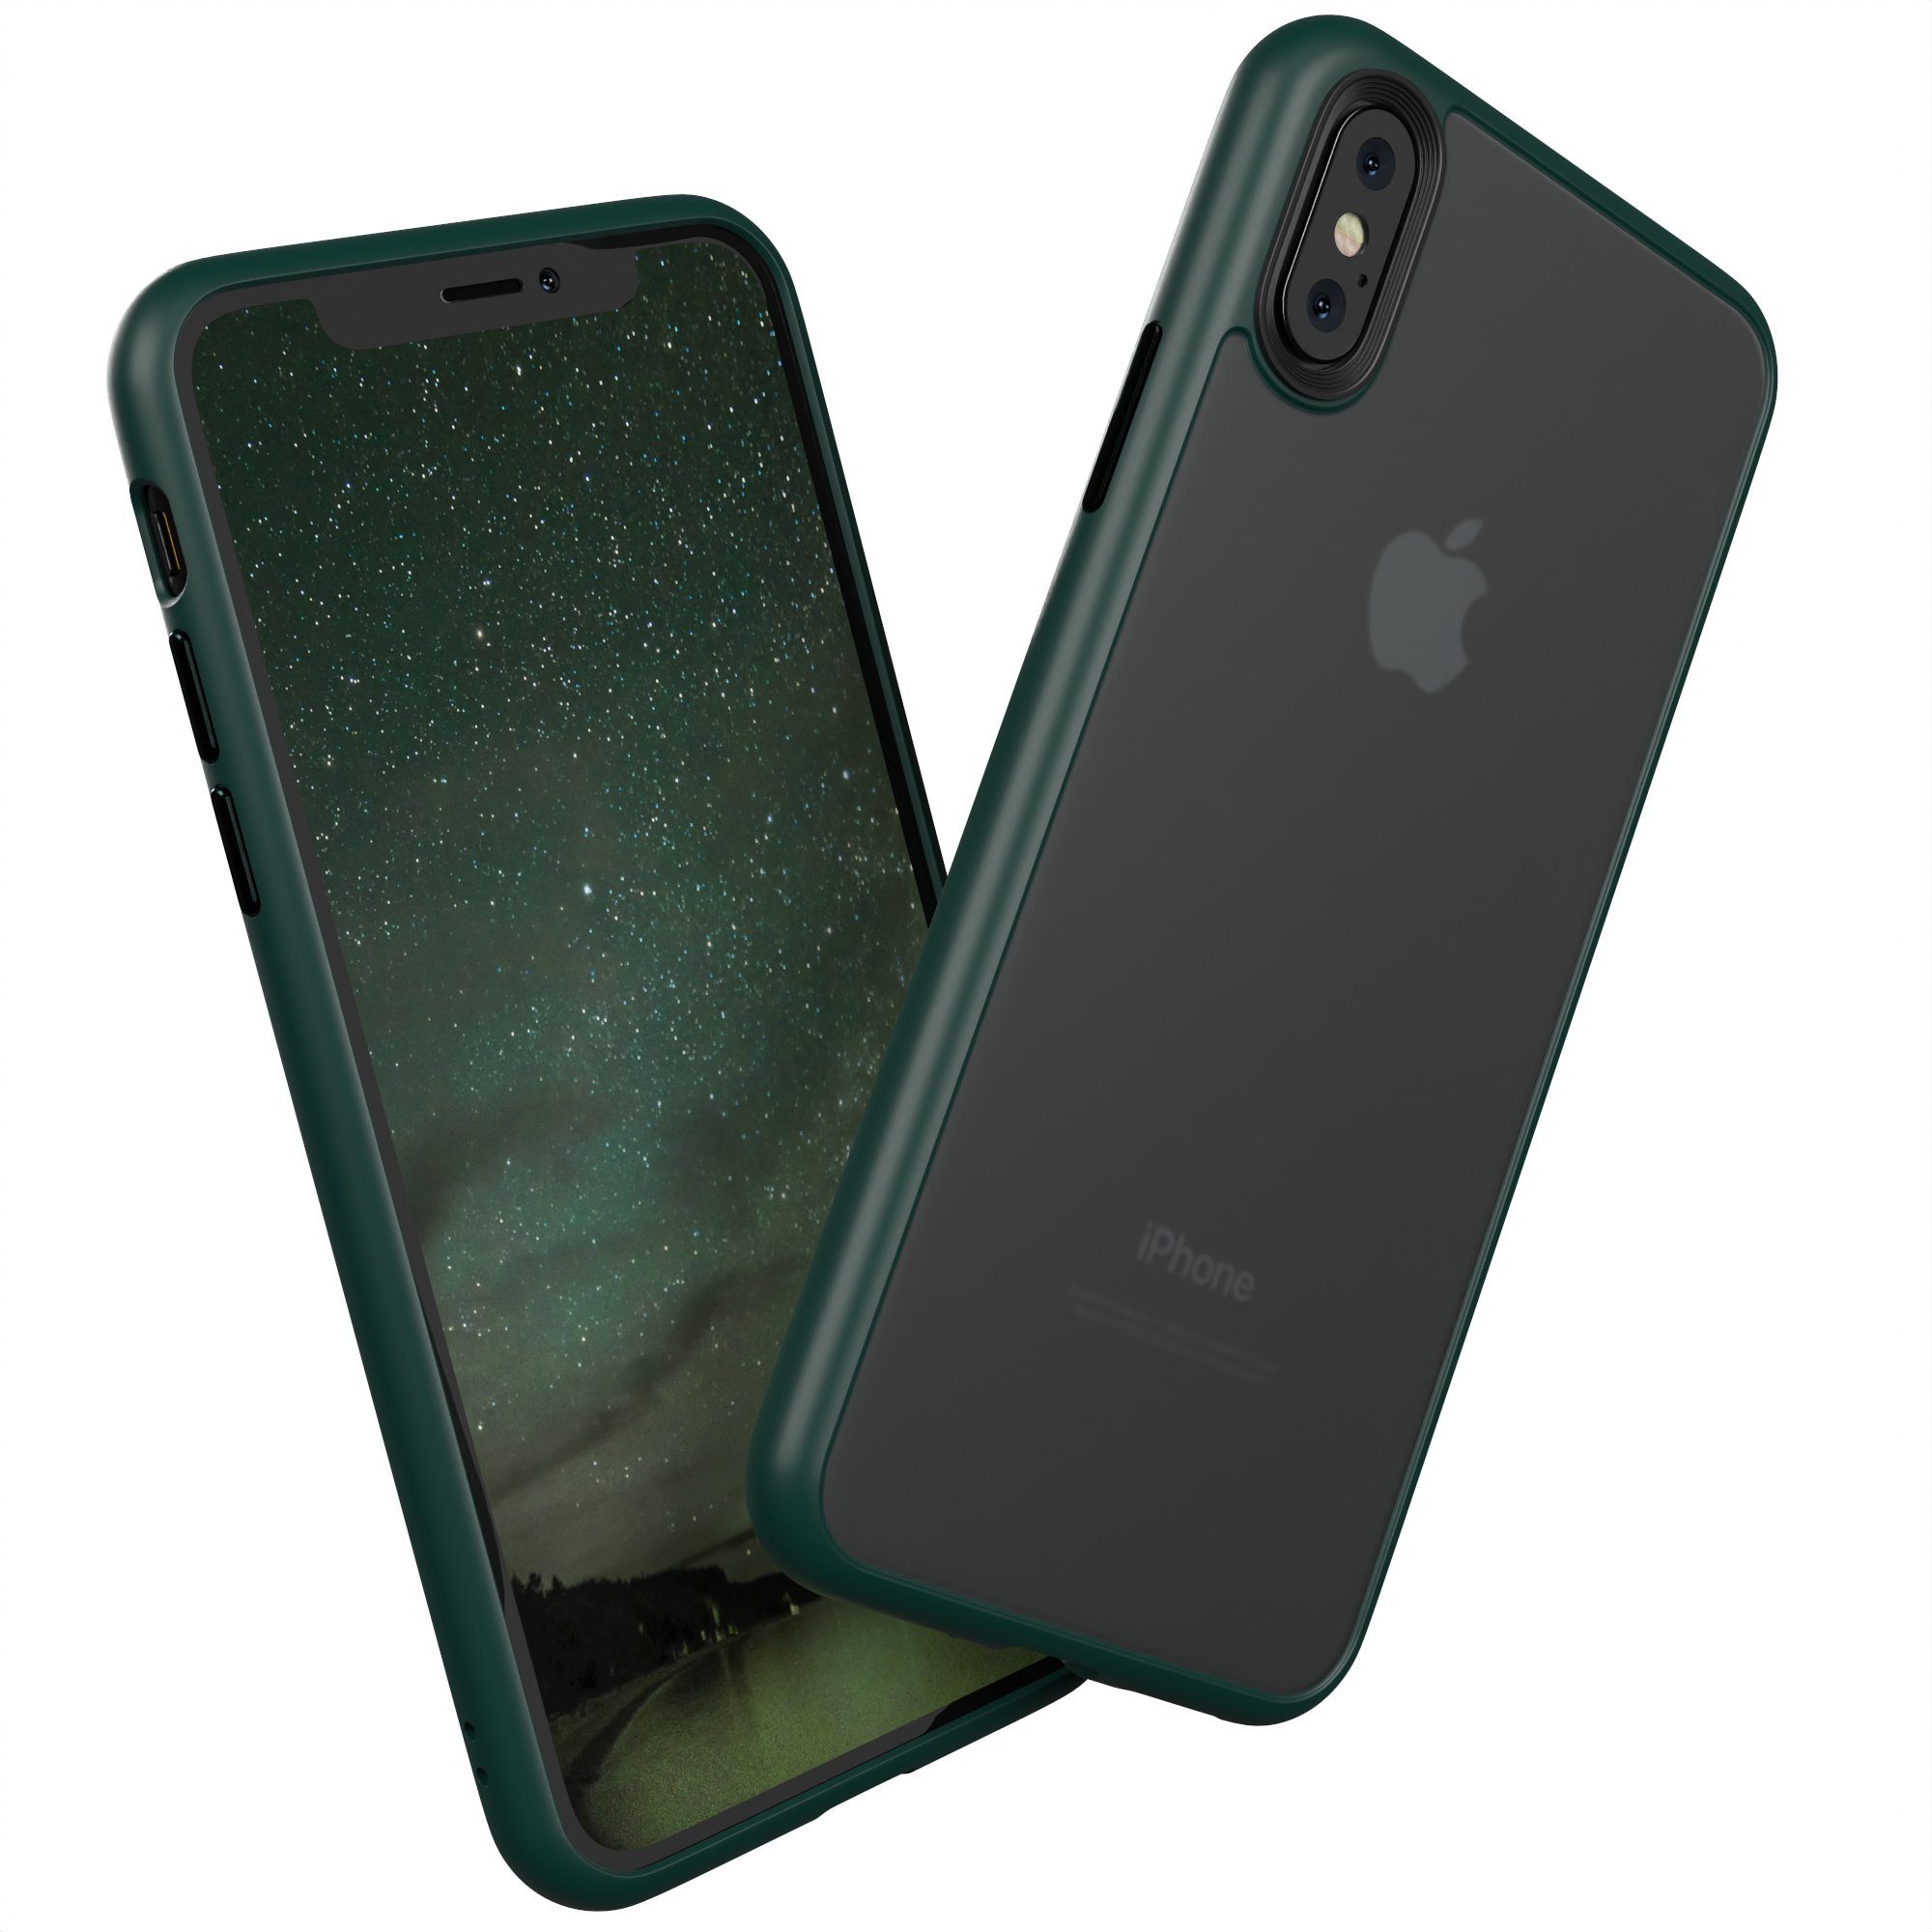 EAZY CASE Handyhülle Outdoor Case für Apple iPhone X / XS 5,8 Zoll, Slim Cover Durchsichtig Robust Back Cover stoßfest Grün / Nachtgrün